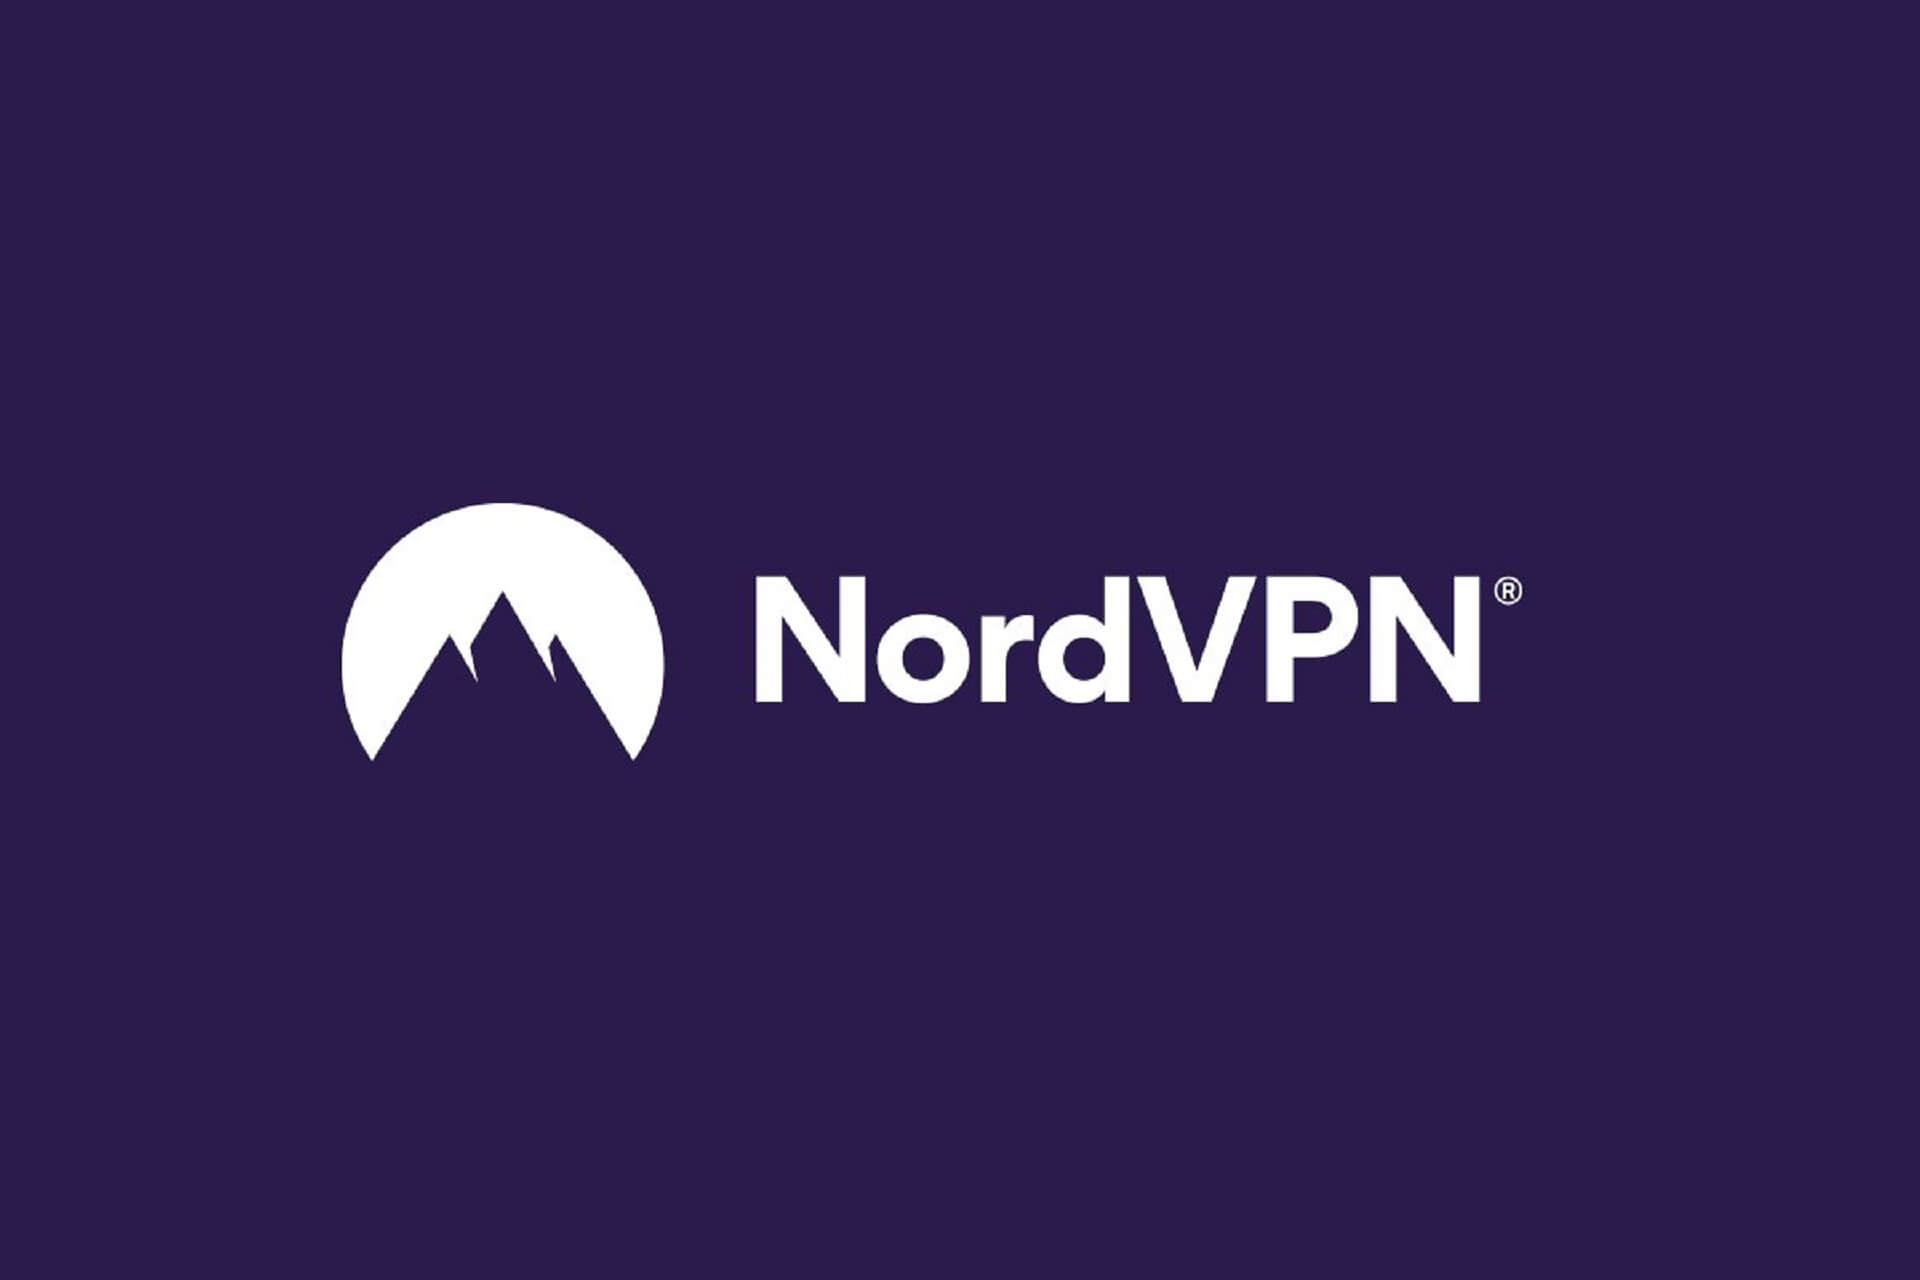 NordVPN by TEFINCOM S.A.